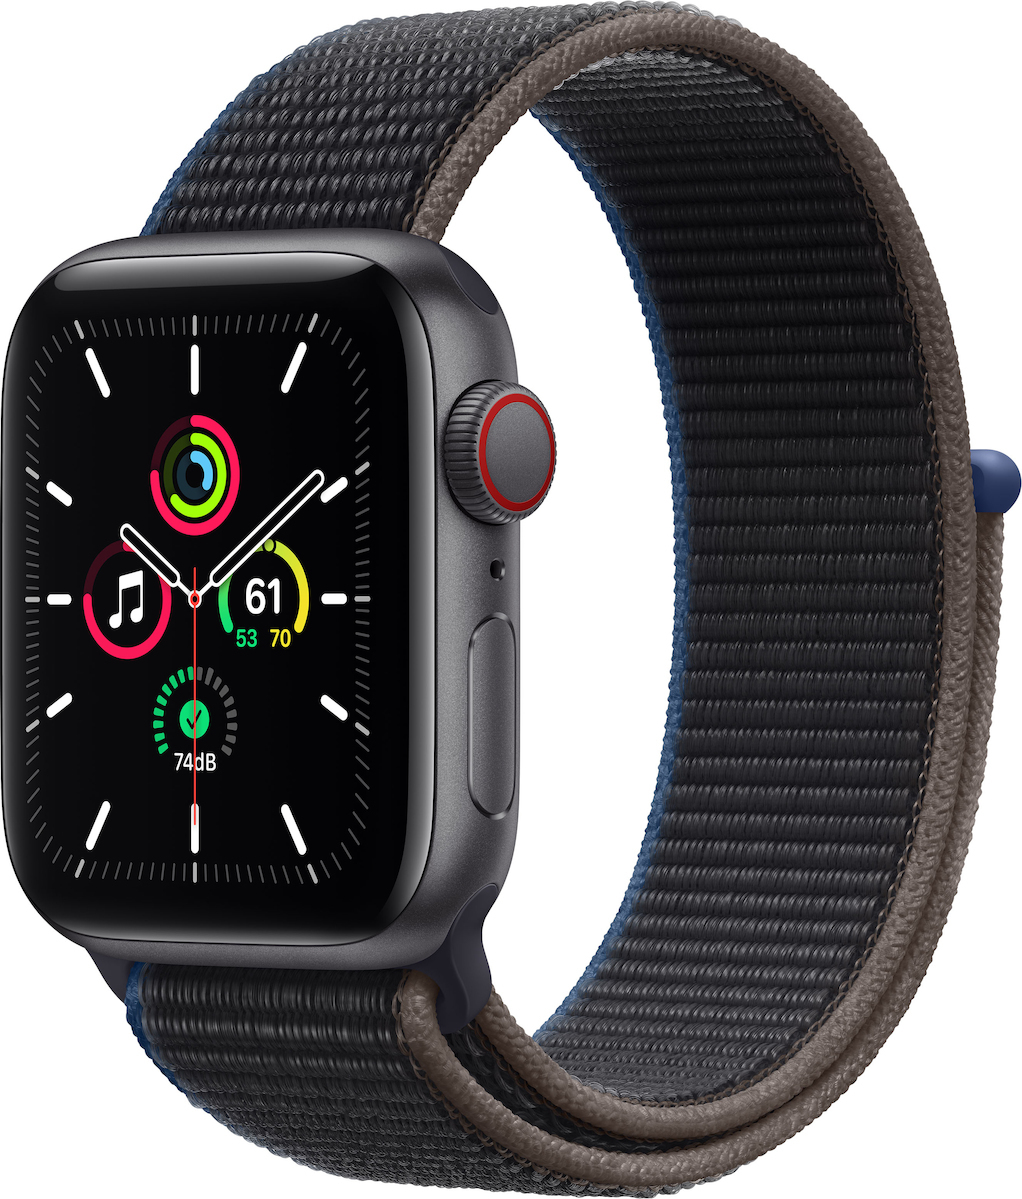 Apple Watch SE Cellular 40mm (Space Gray & Charcoal Sport Loop) - Skroutz.gr